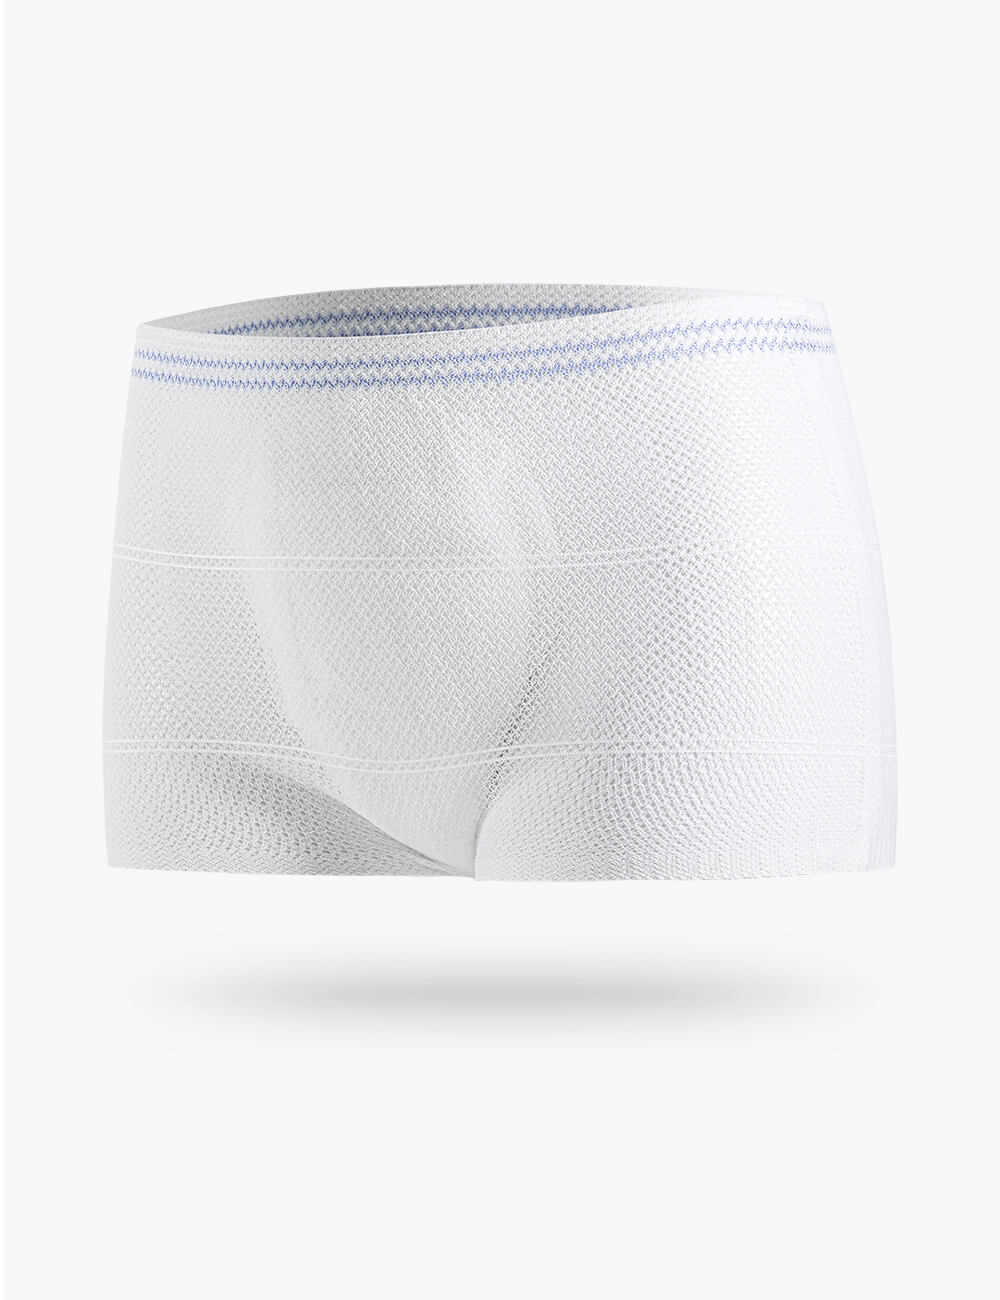 Postpartum Mesh Underwear: Why Do You Need Them?